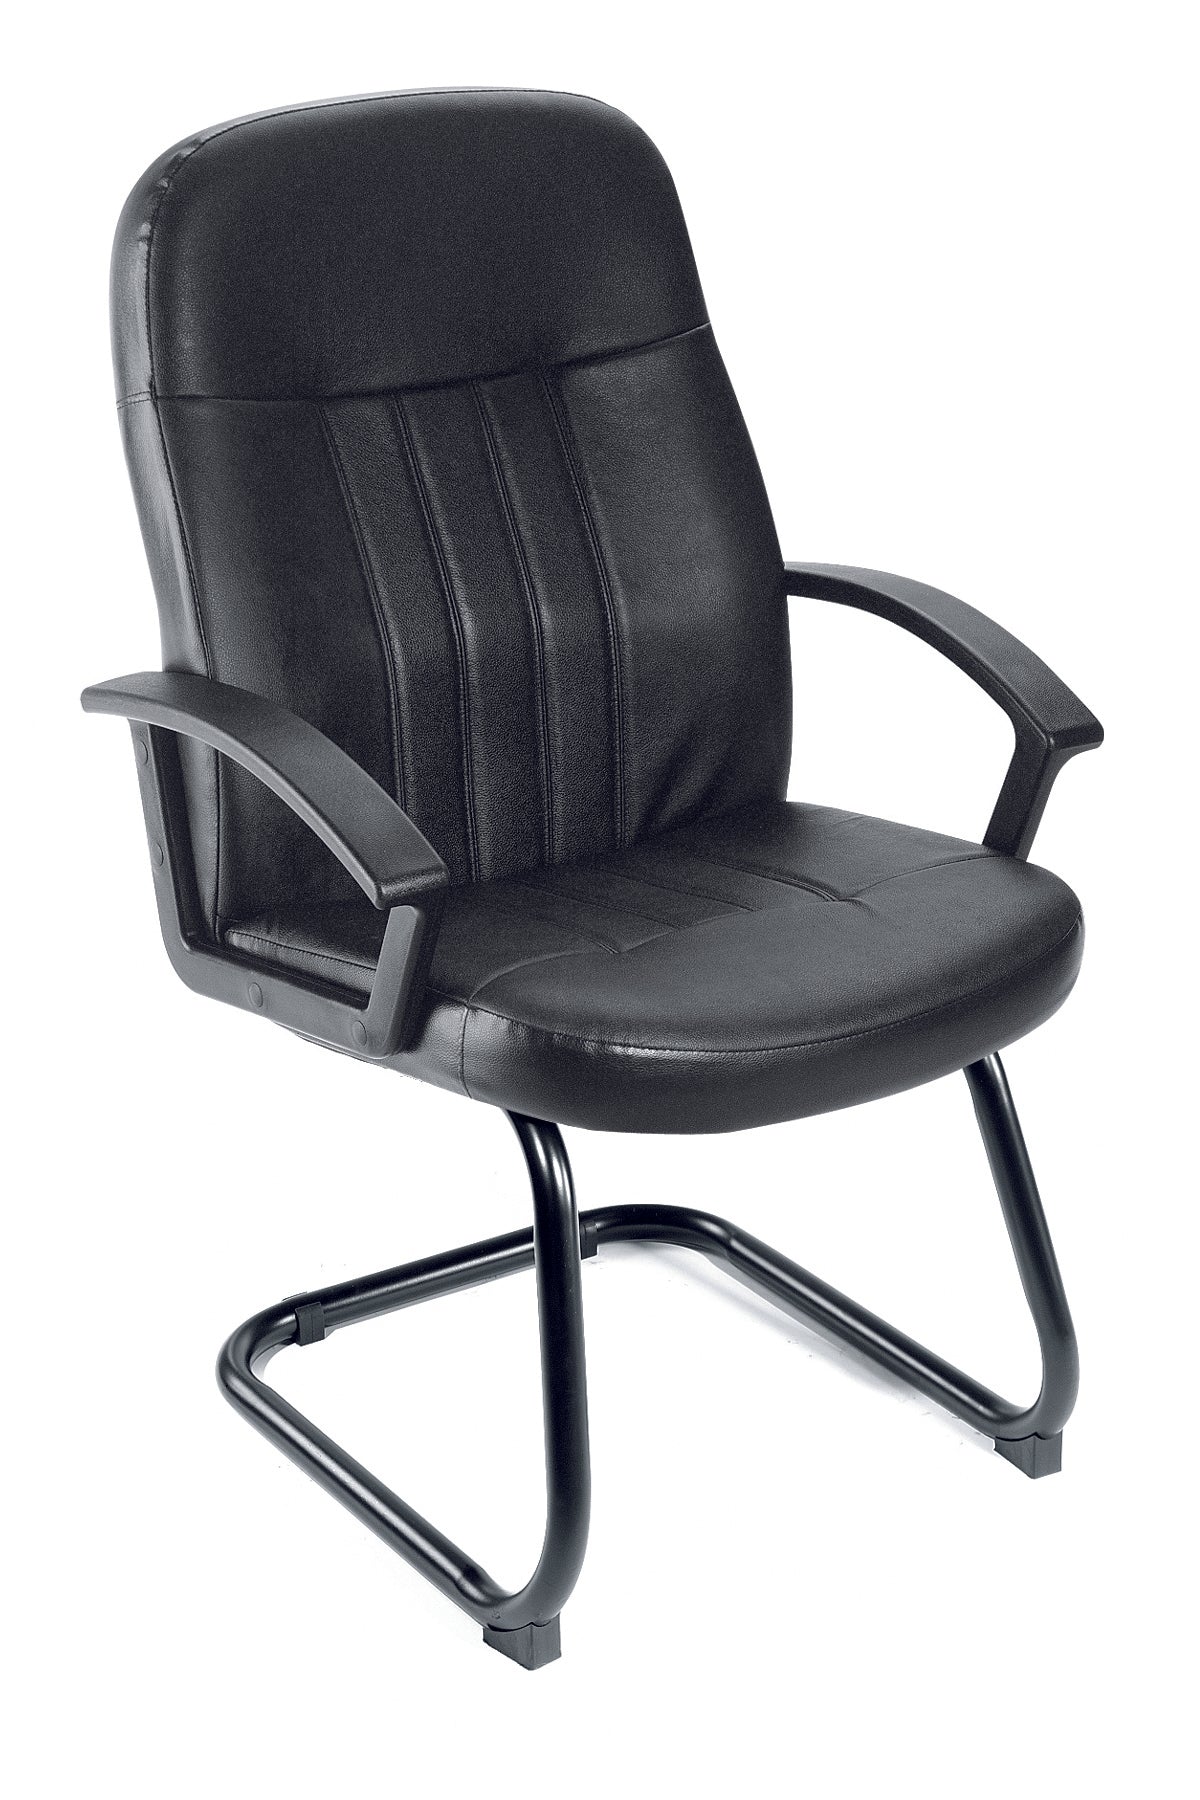 Boss Executive LeatherPlus Budget Guest Chair, Black (B8109) - SchoolOutlet